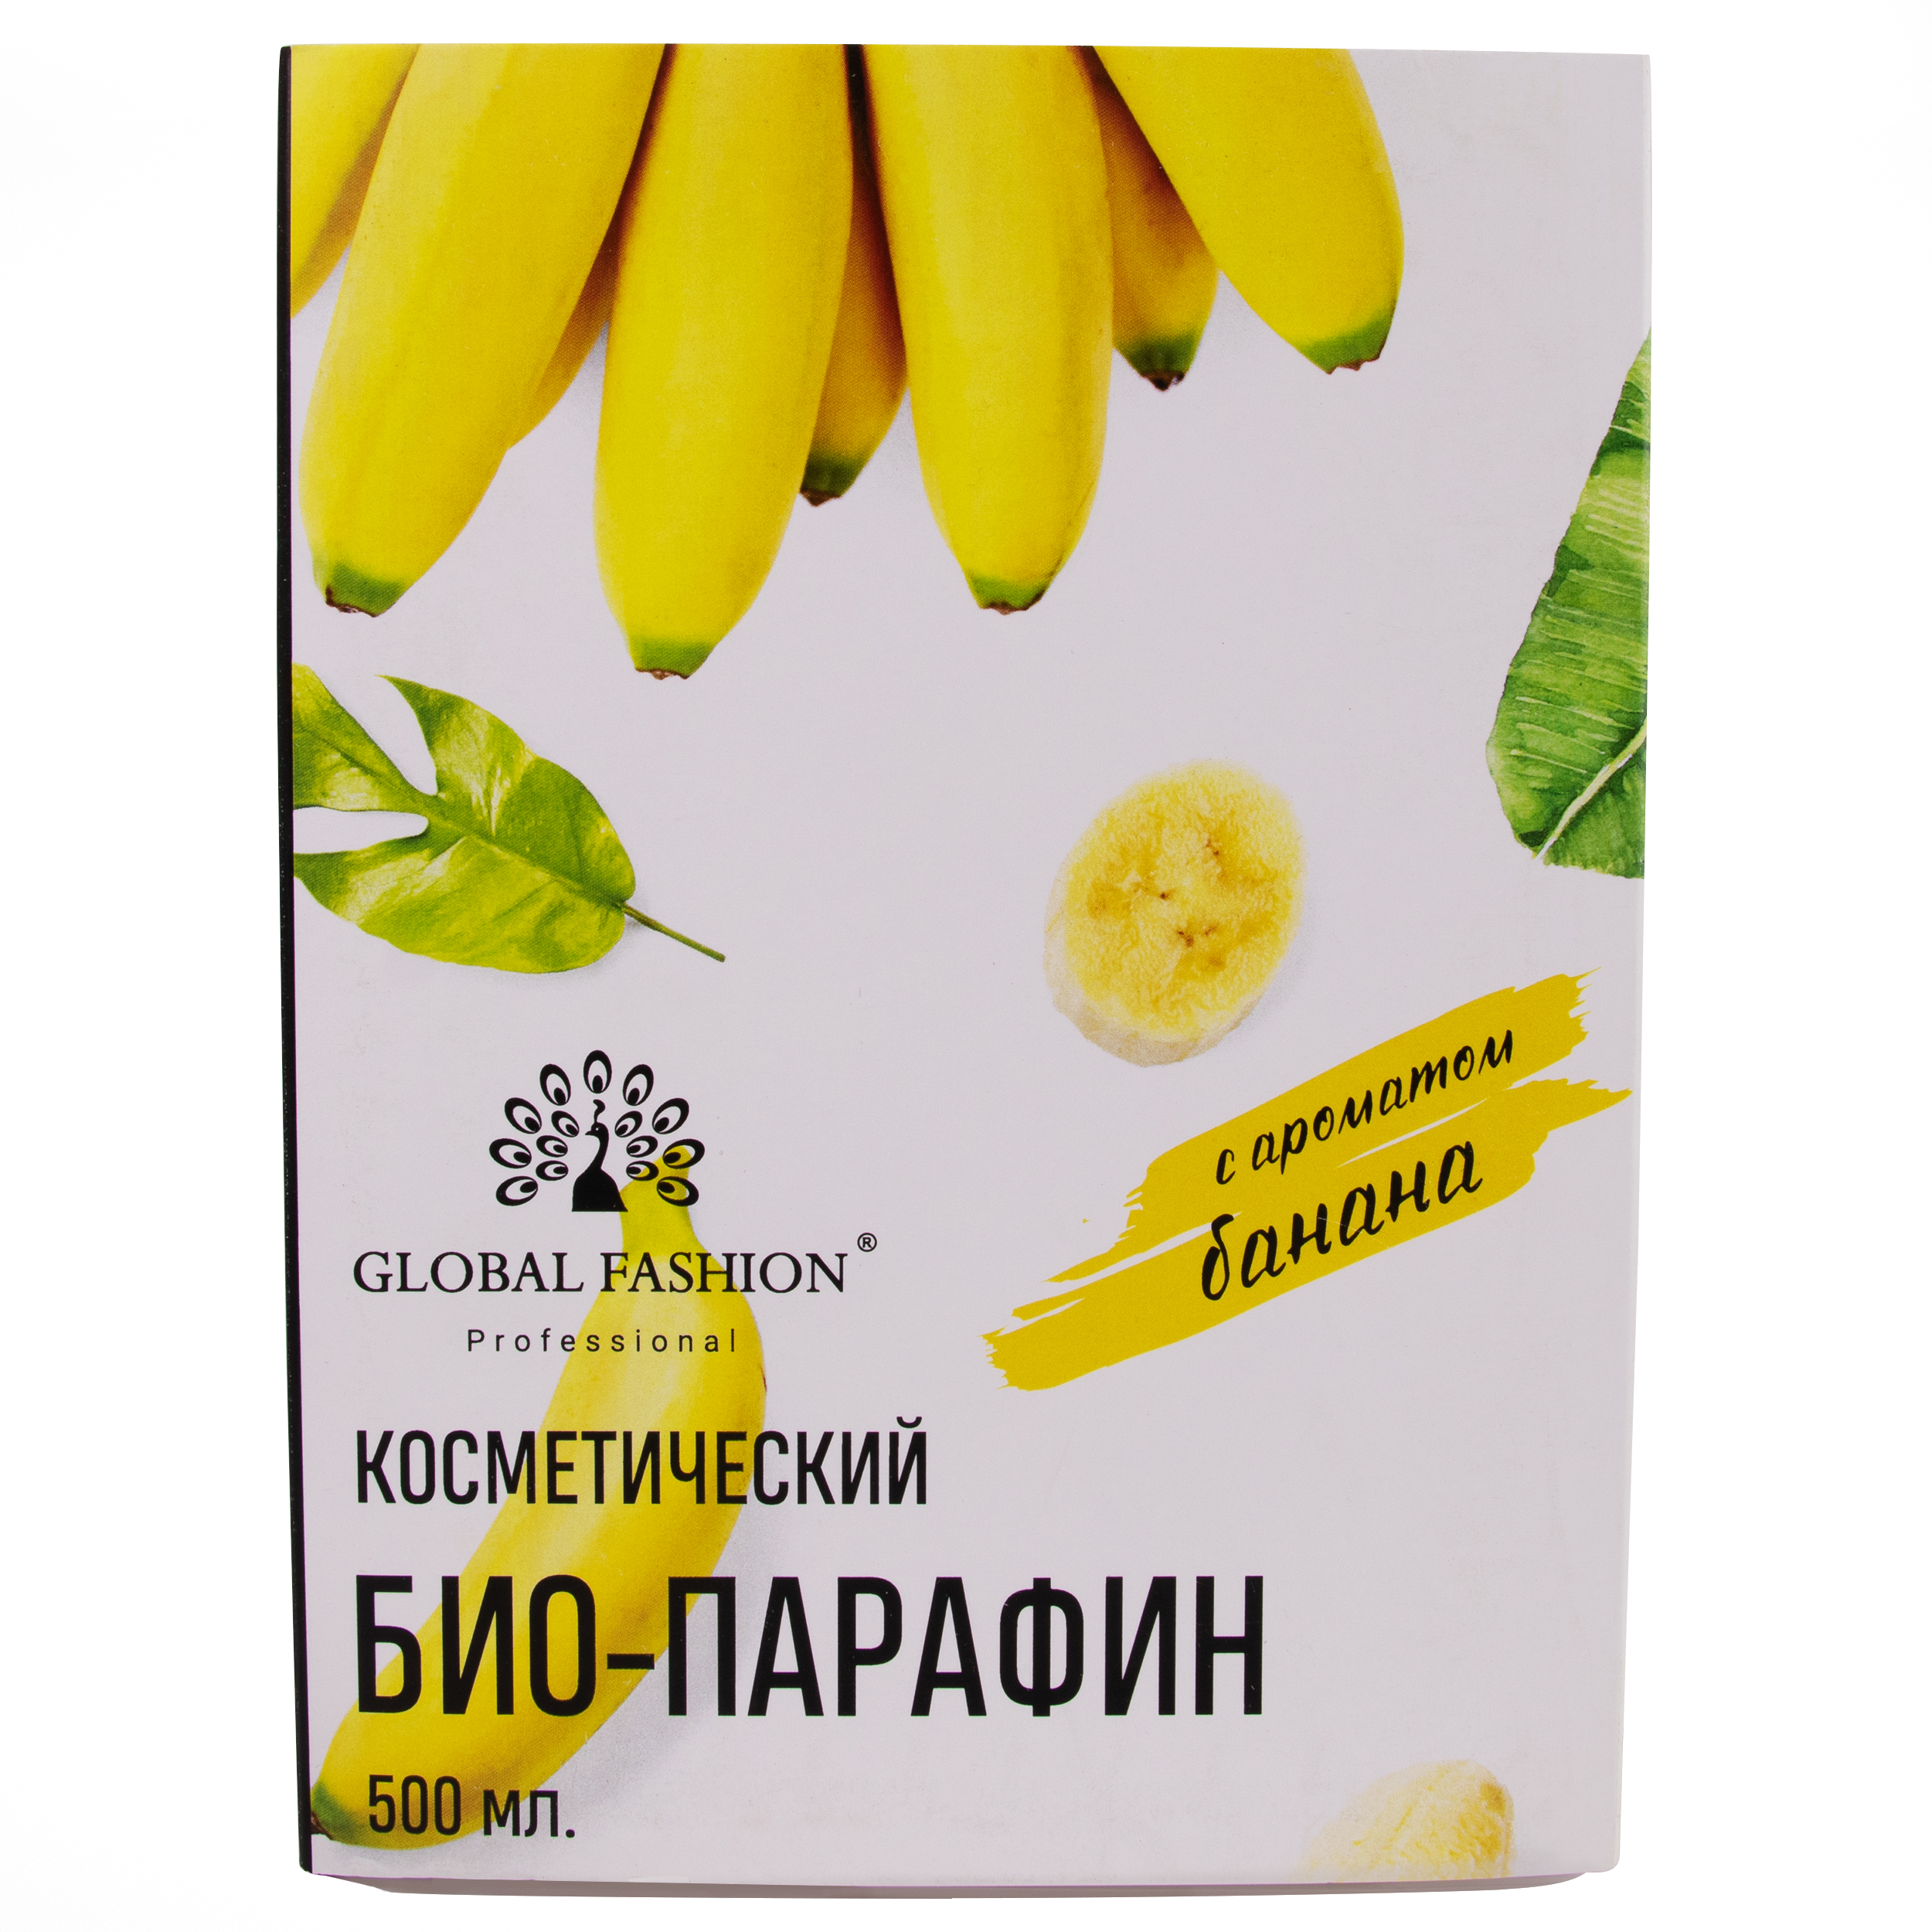 Био-парафин Global Fashion Косметический с ароматом банана, 500 мл